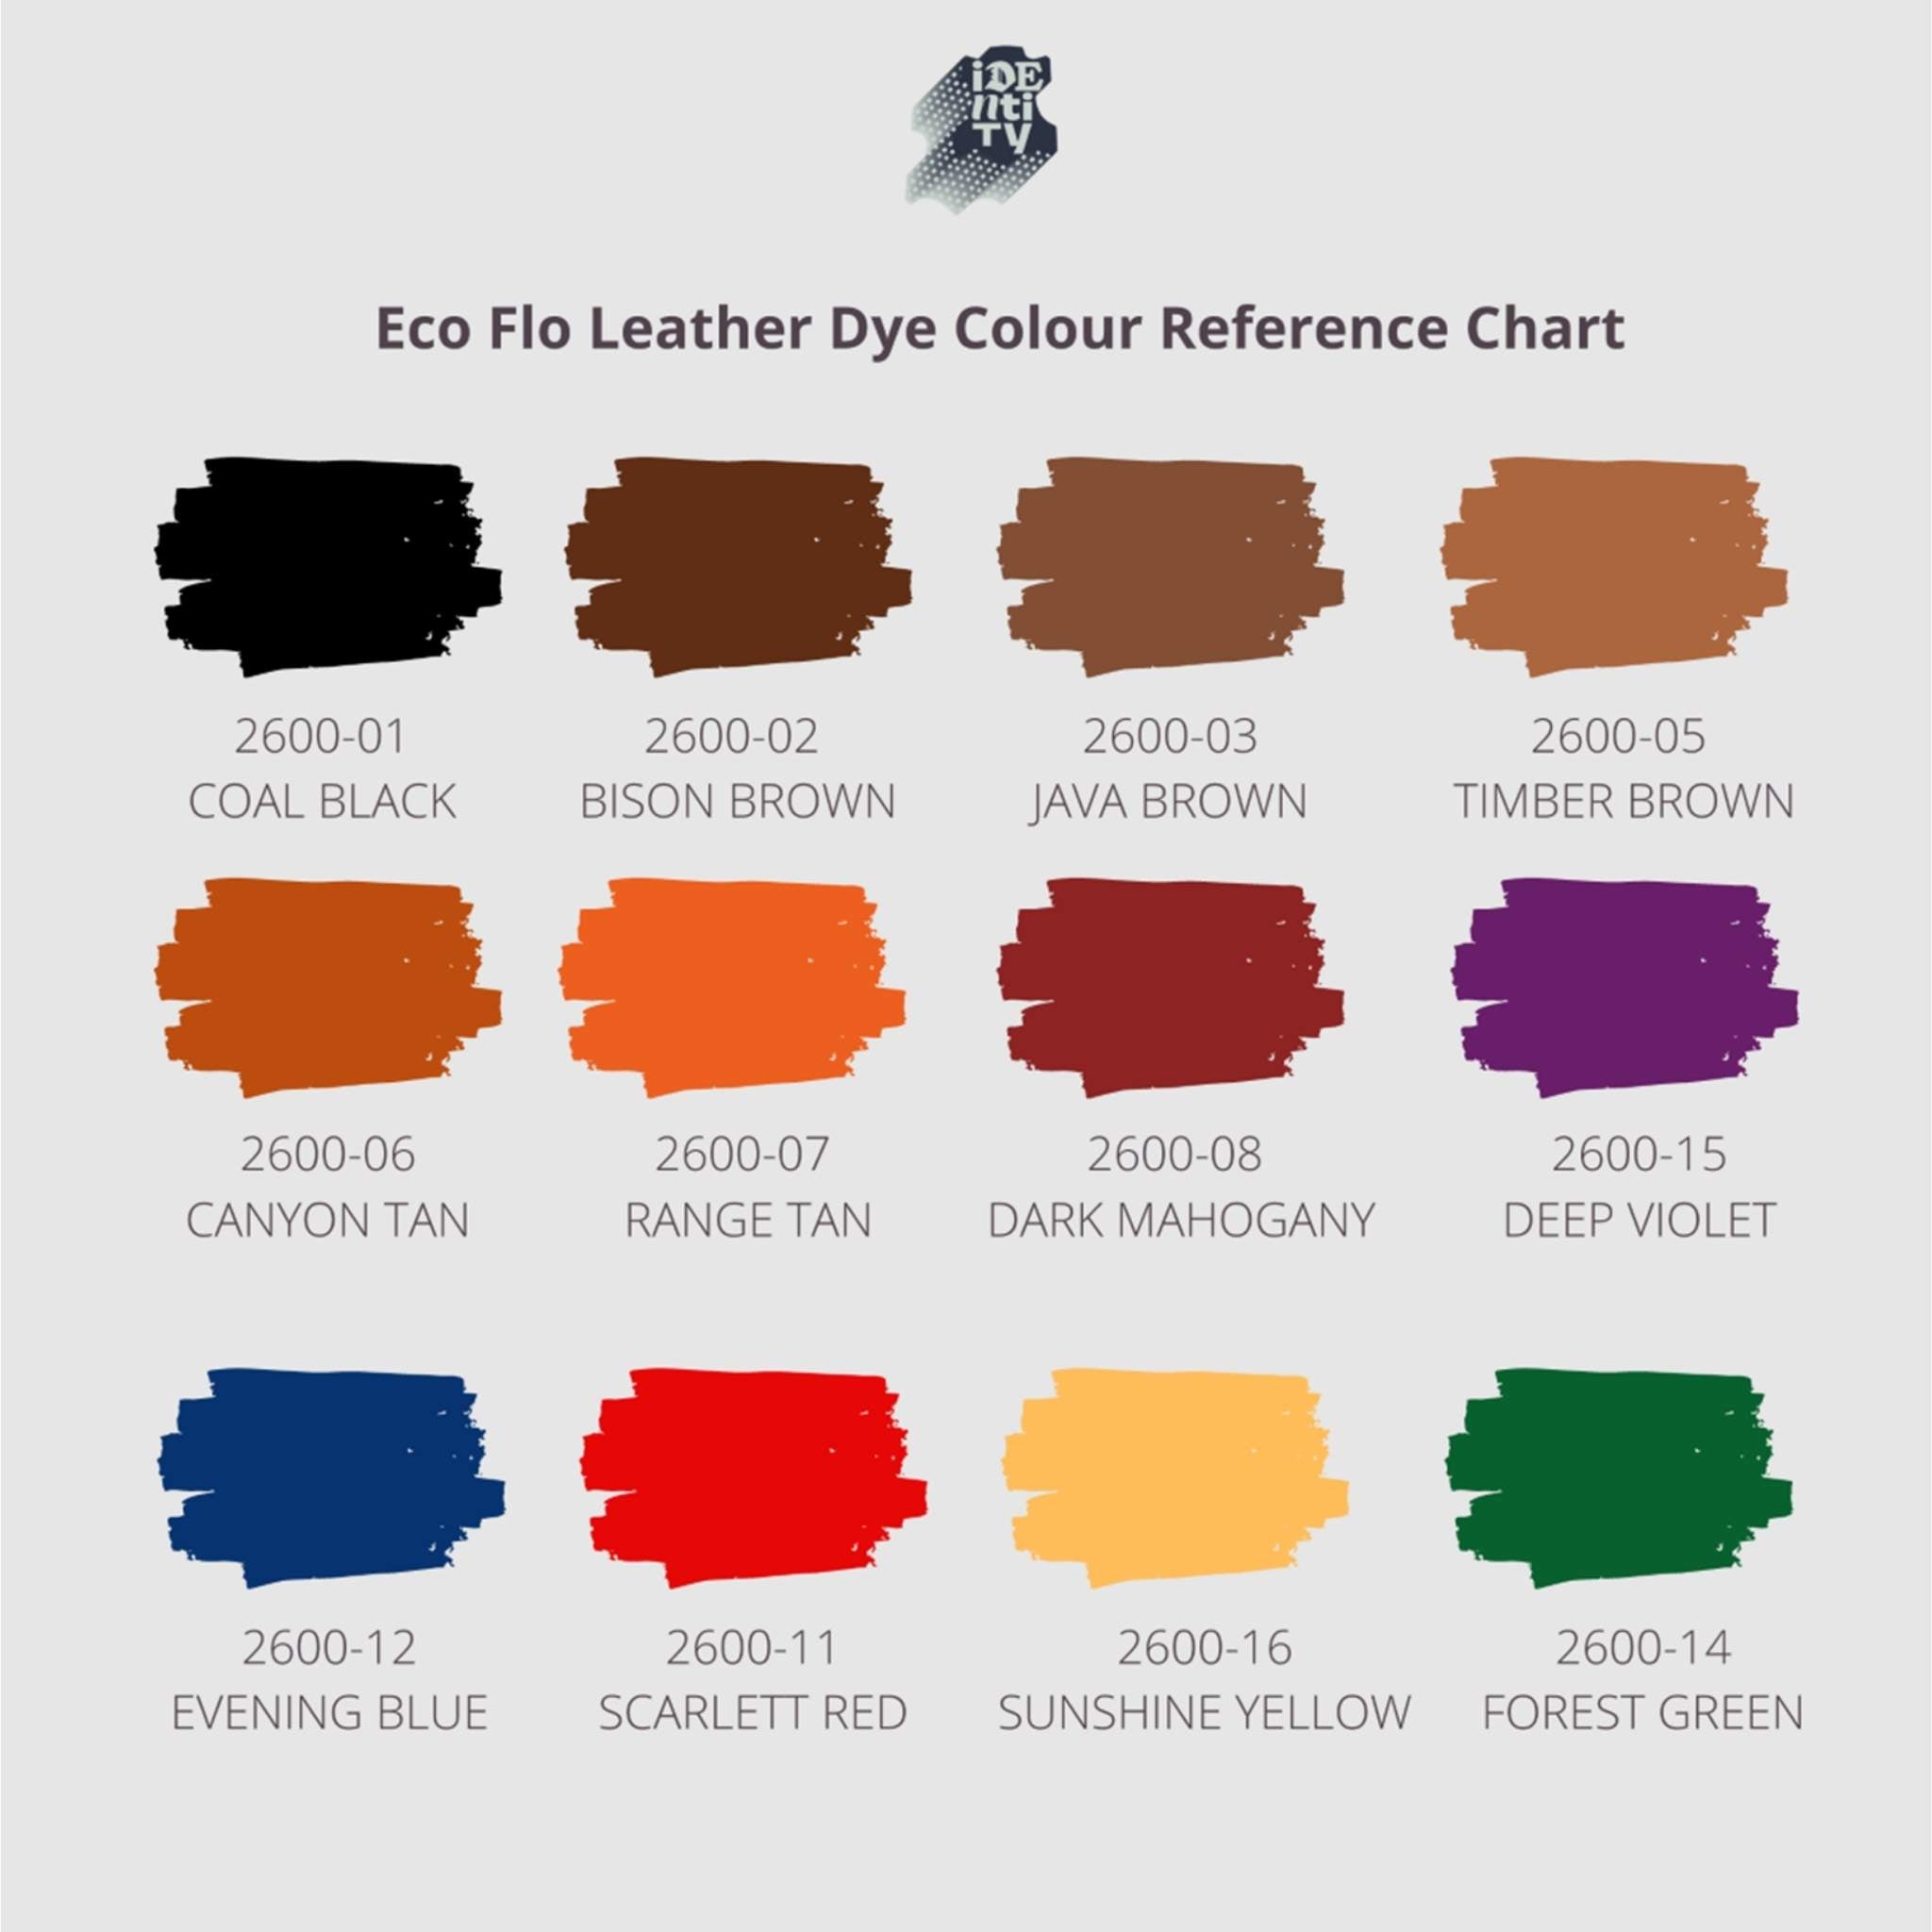 Eco-Flo Leather Dye Colour Chart from Identity Leathercraft